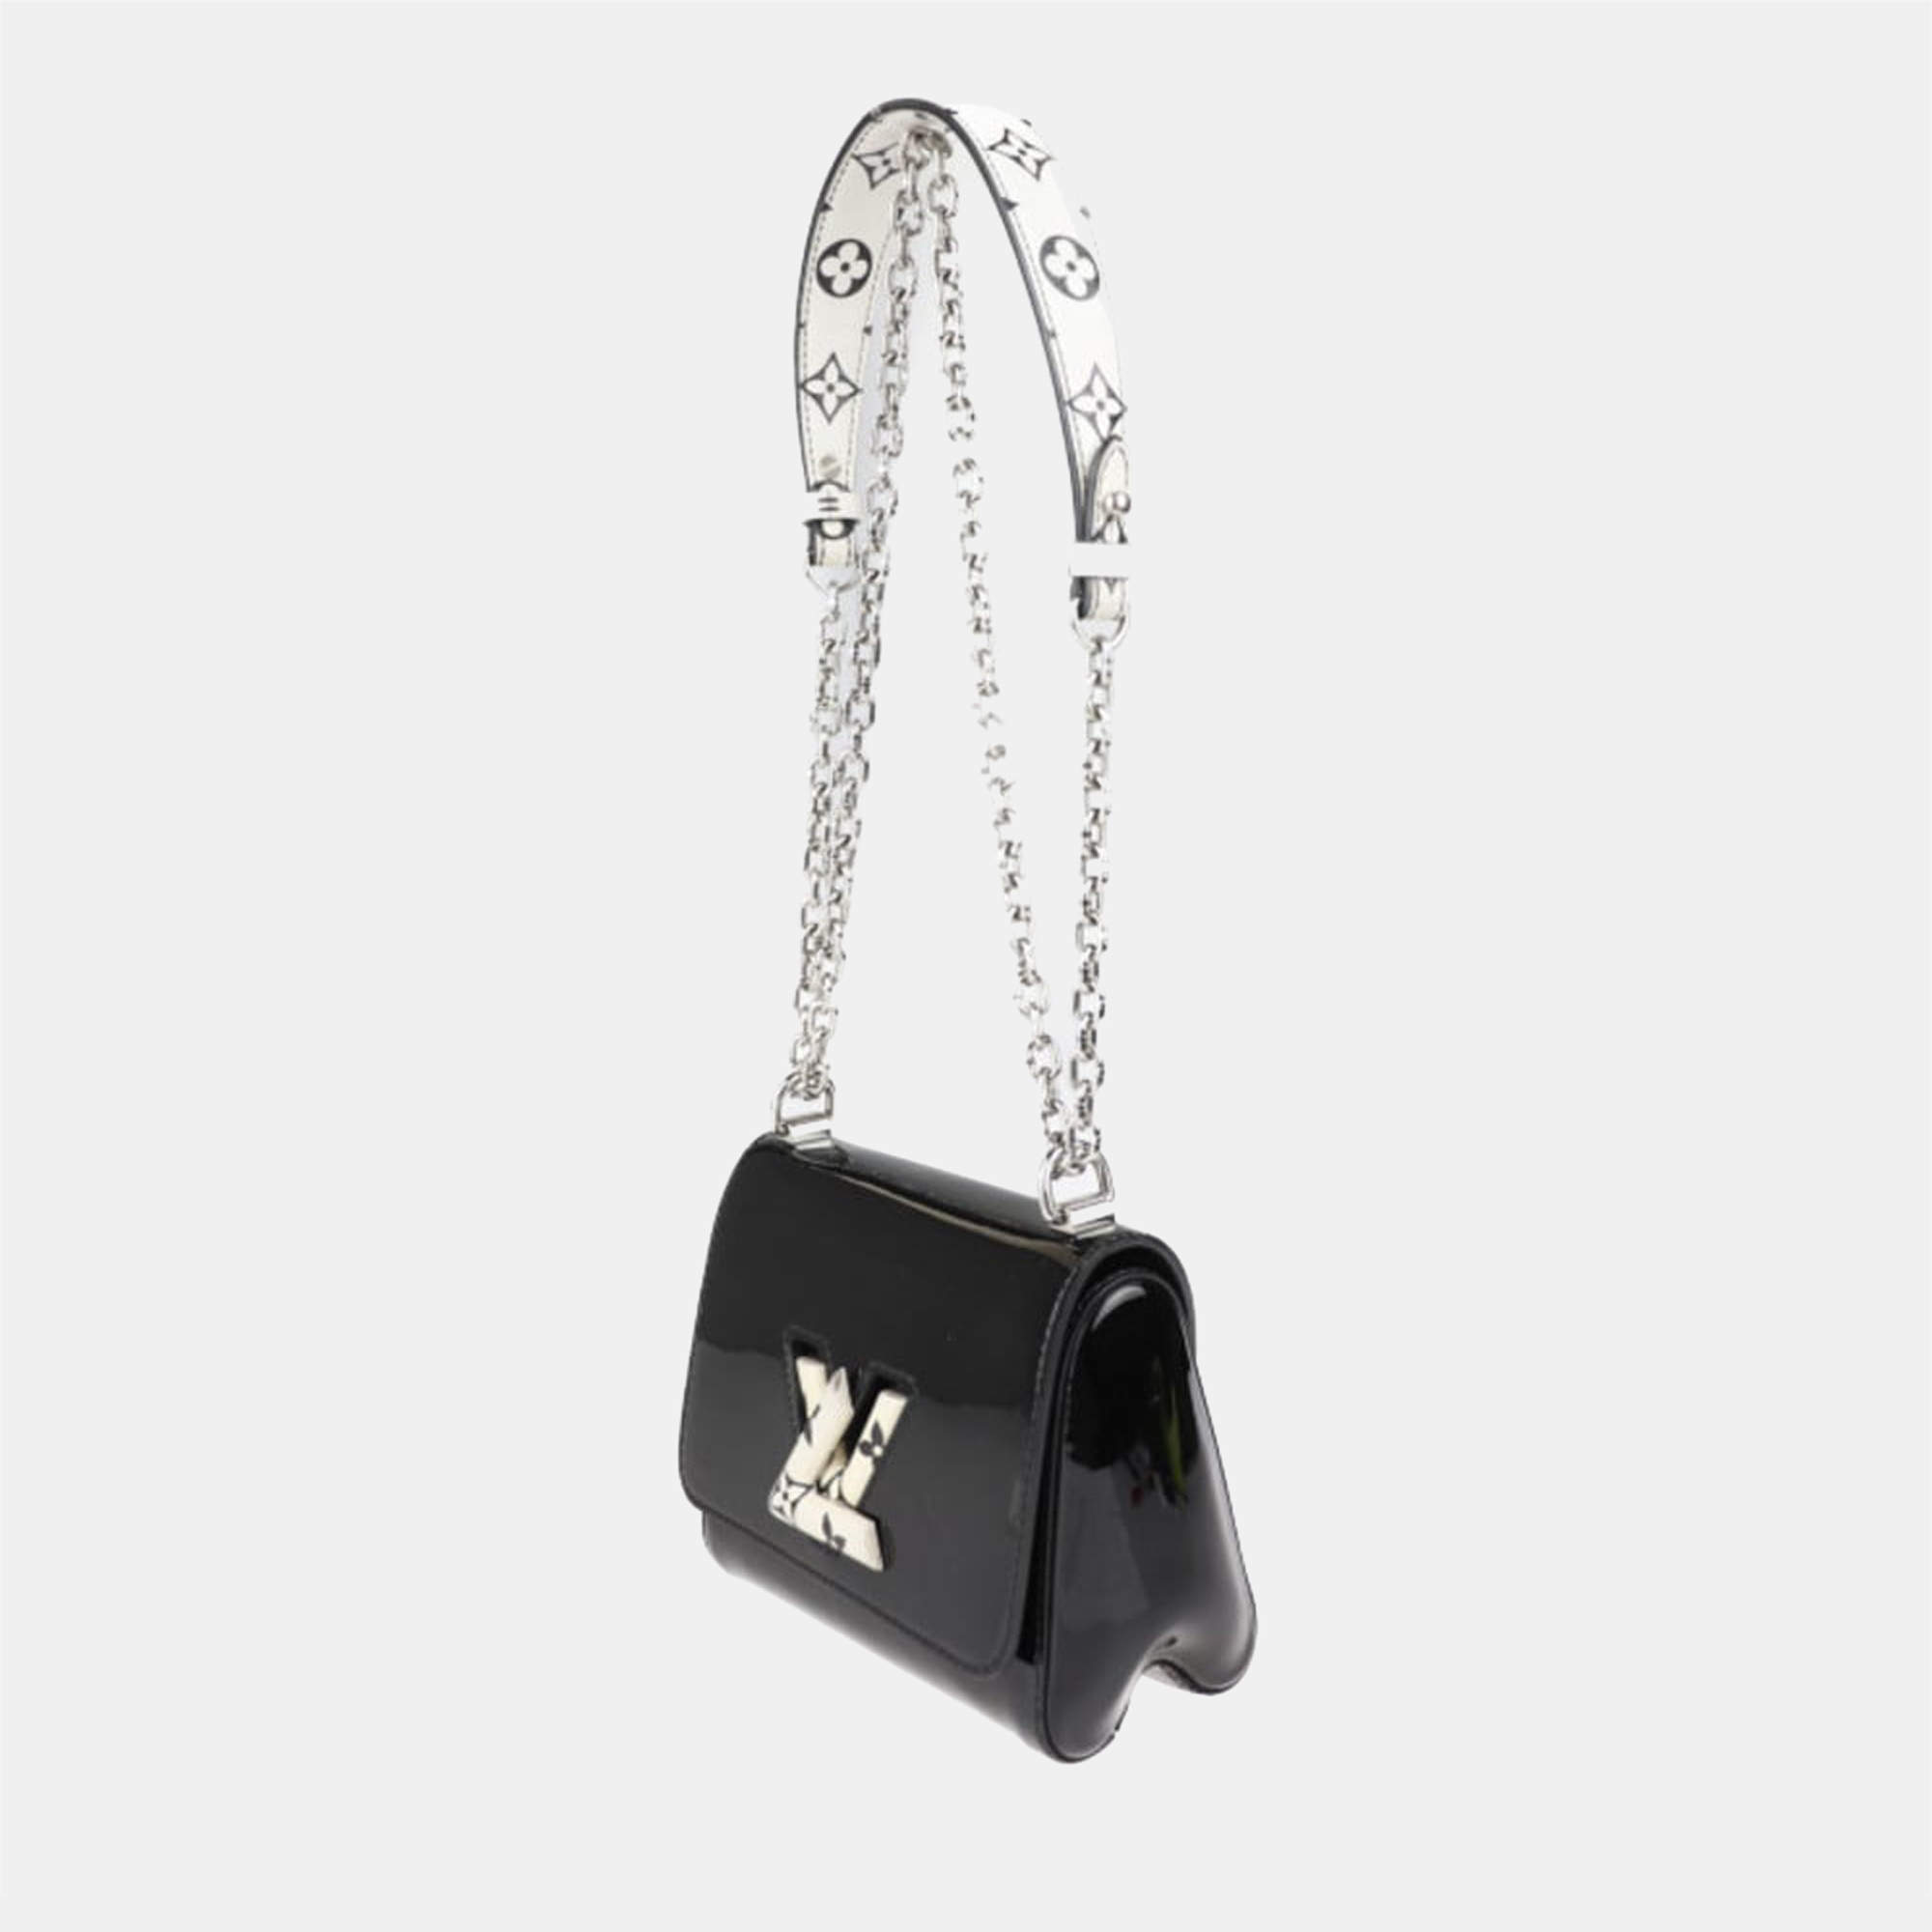 Louis Vuitton Twist Womens Handbags, Black